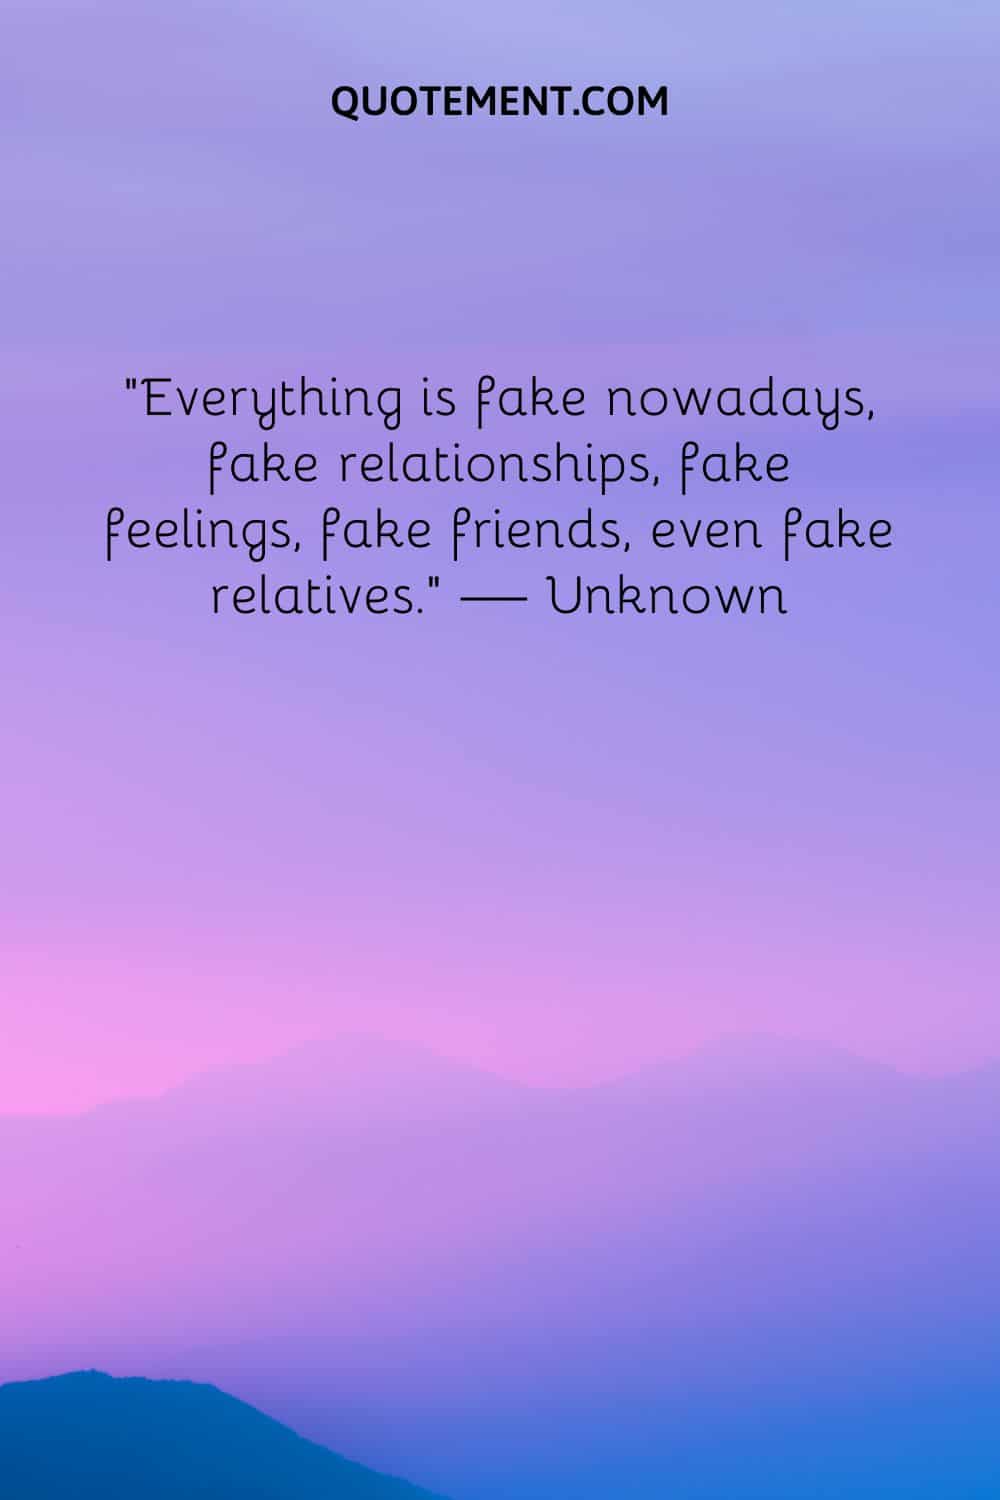 Everything is fake nowadays, fake relationships, fake feelings, fake friends, even fake relatives